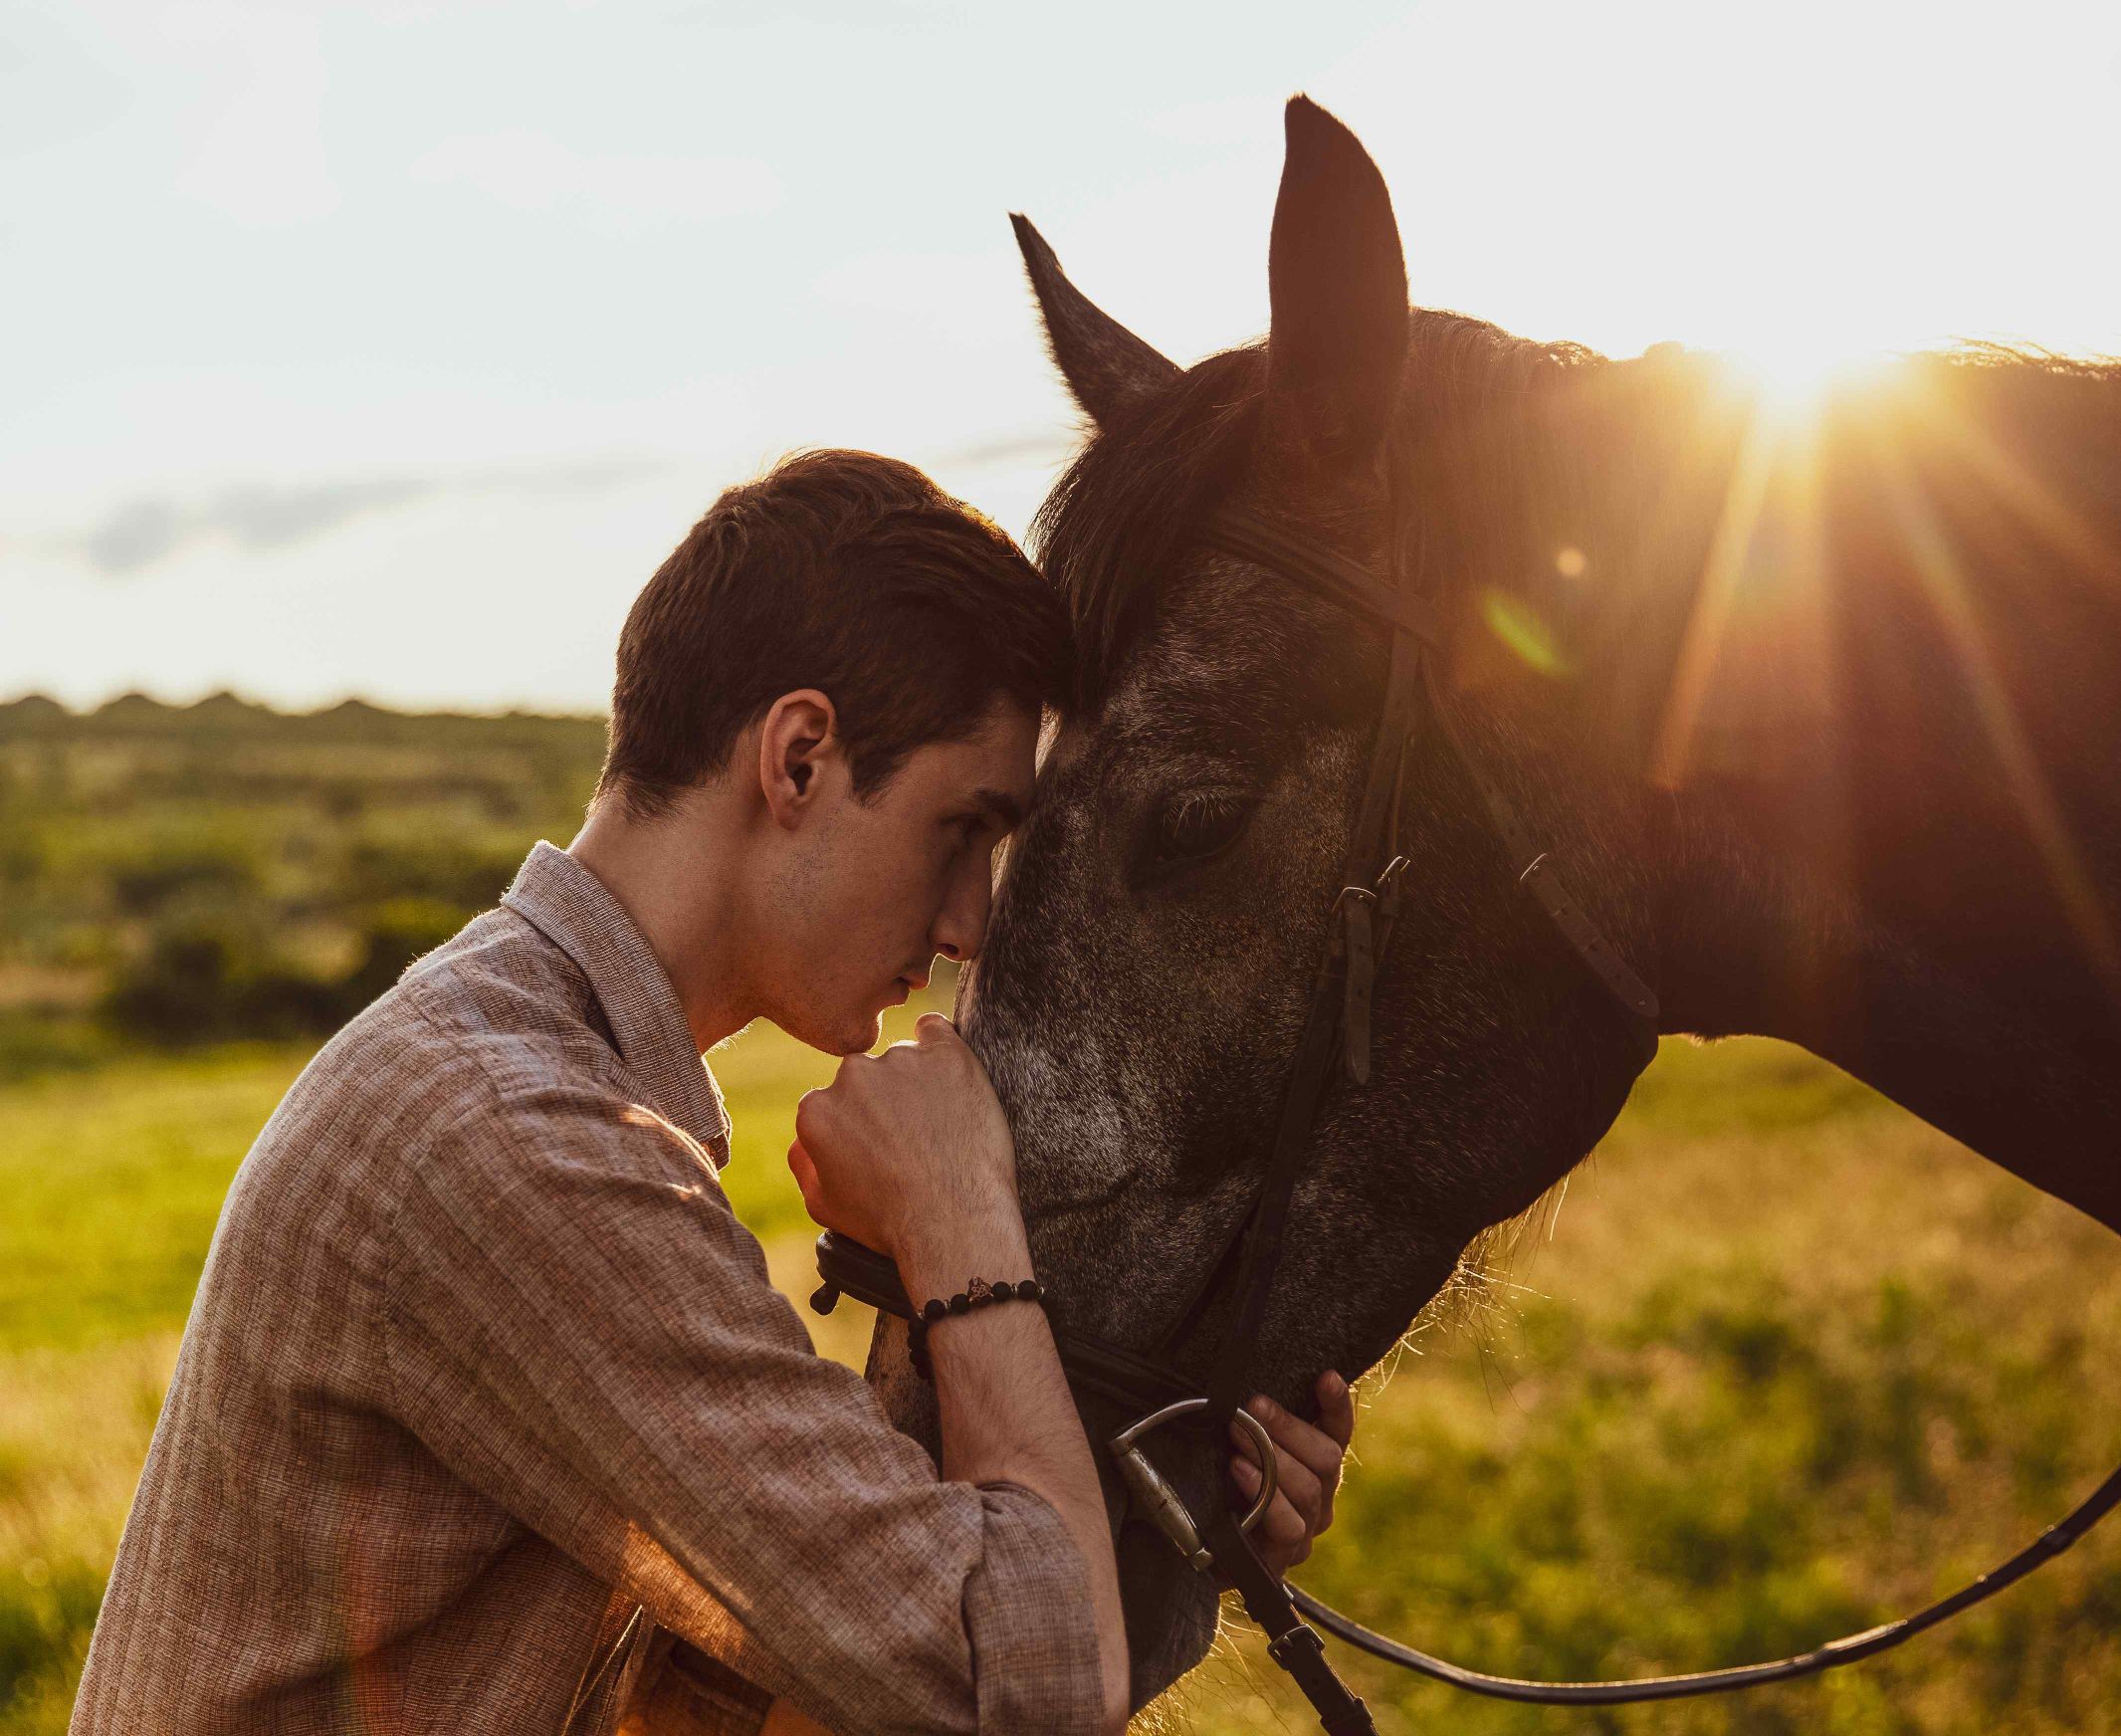 557-young-male-hugging-horse-field-sunlight-evening.jpg